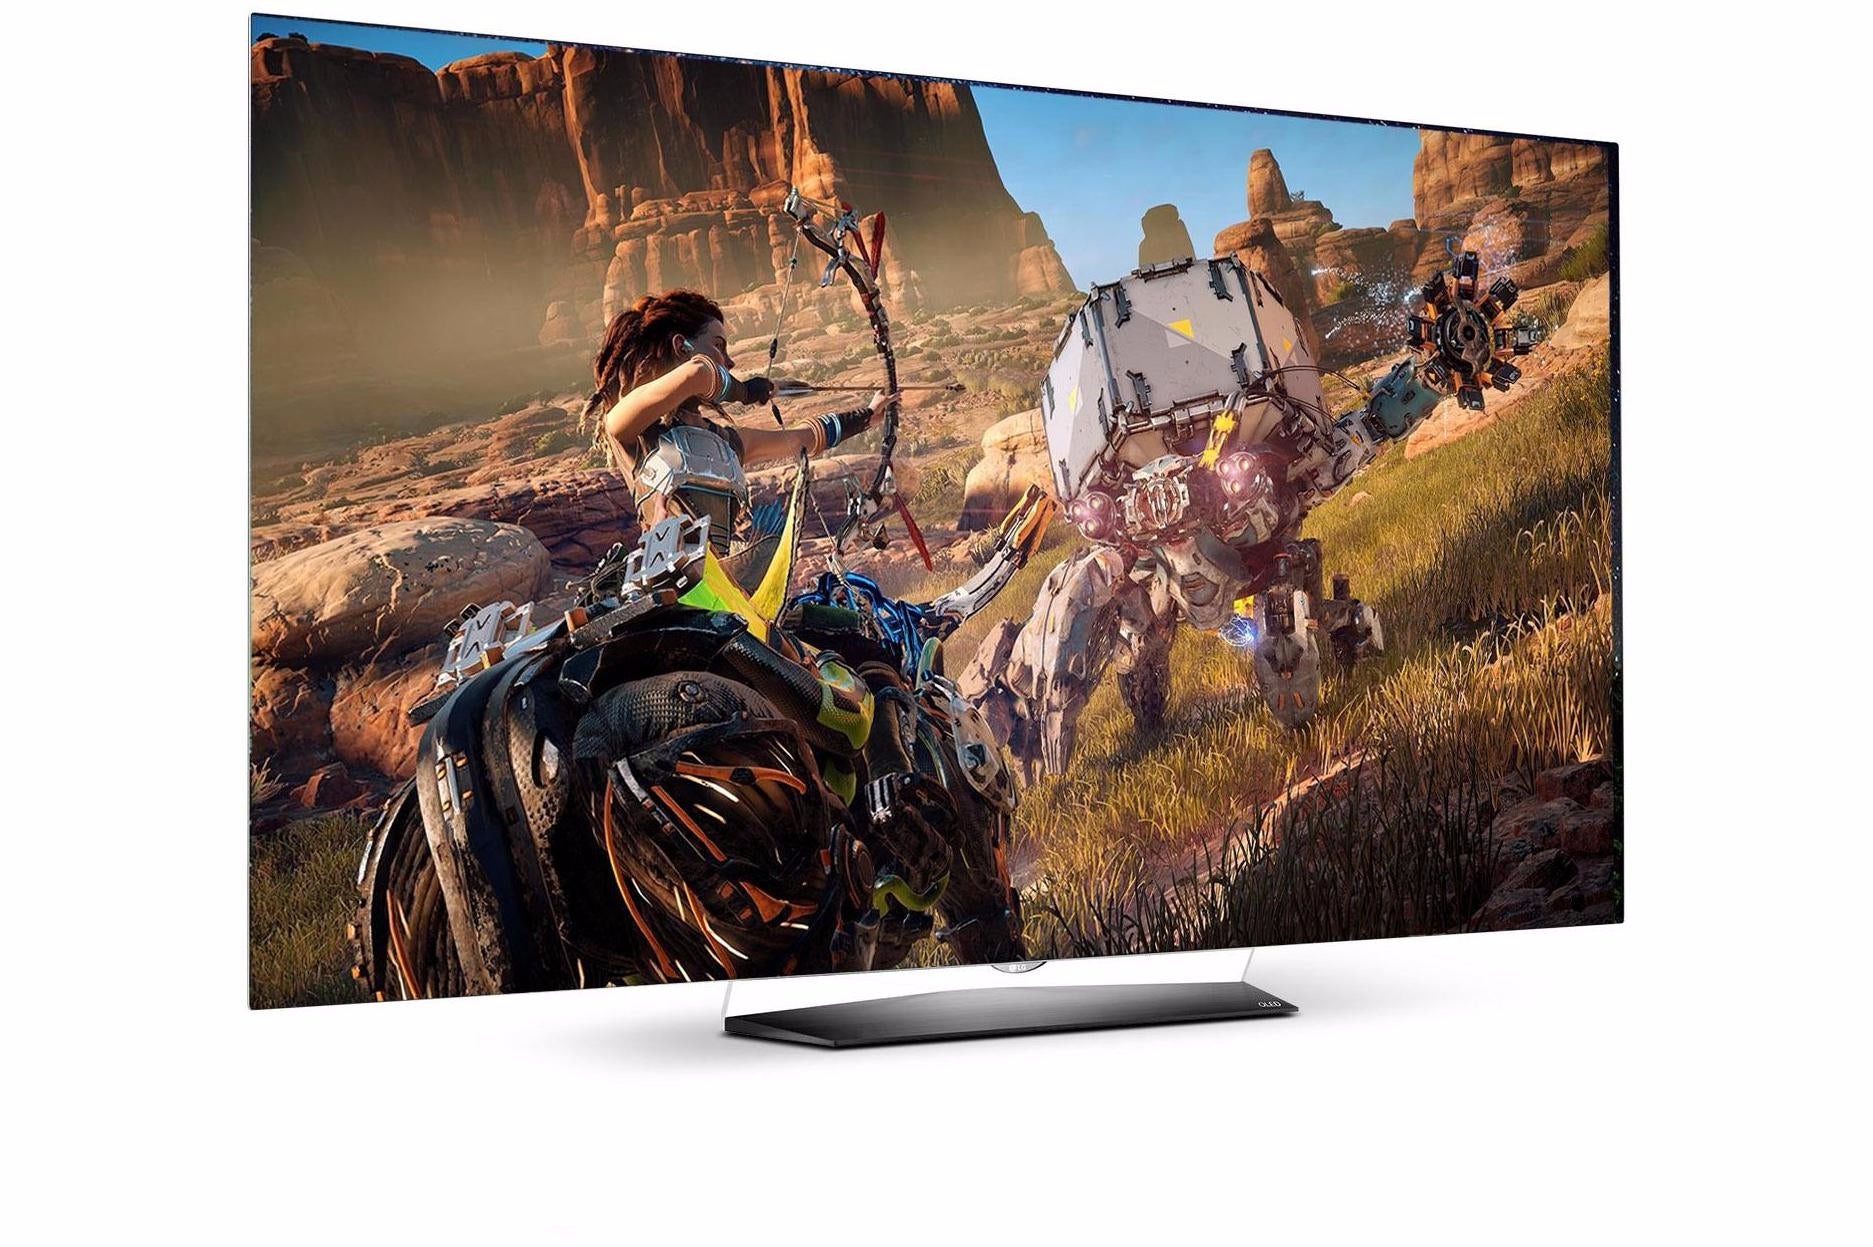 LG OLED B6 4K TV review 